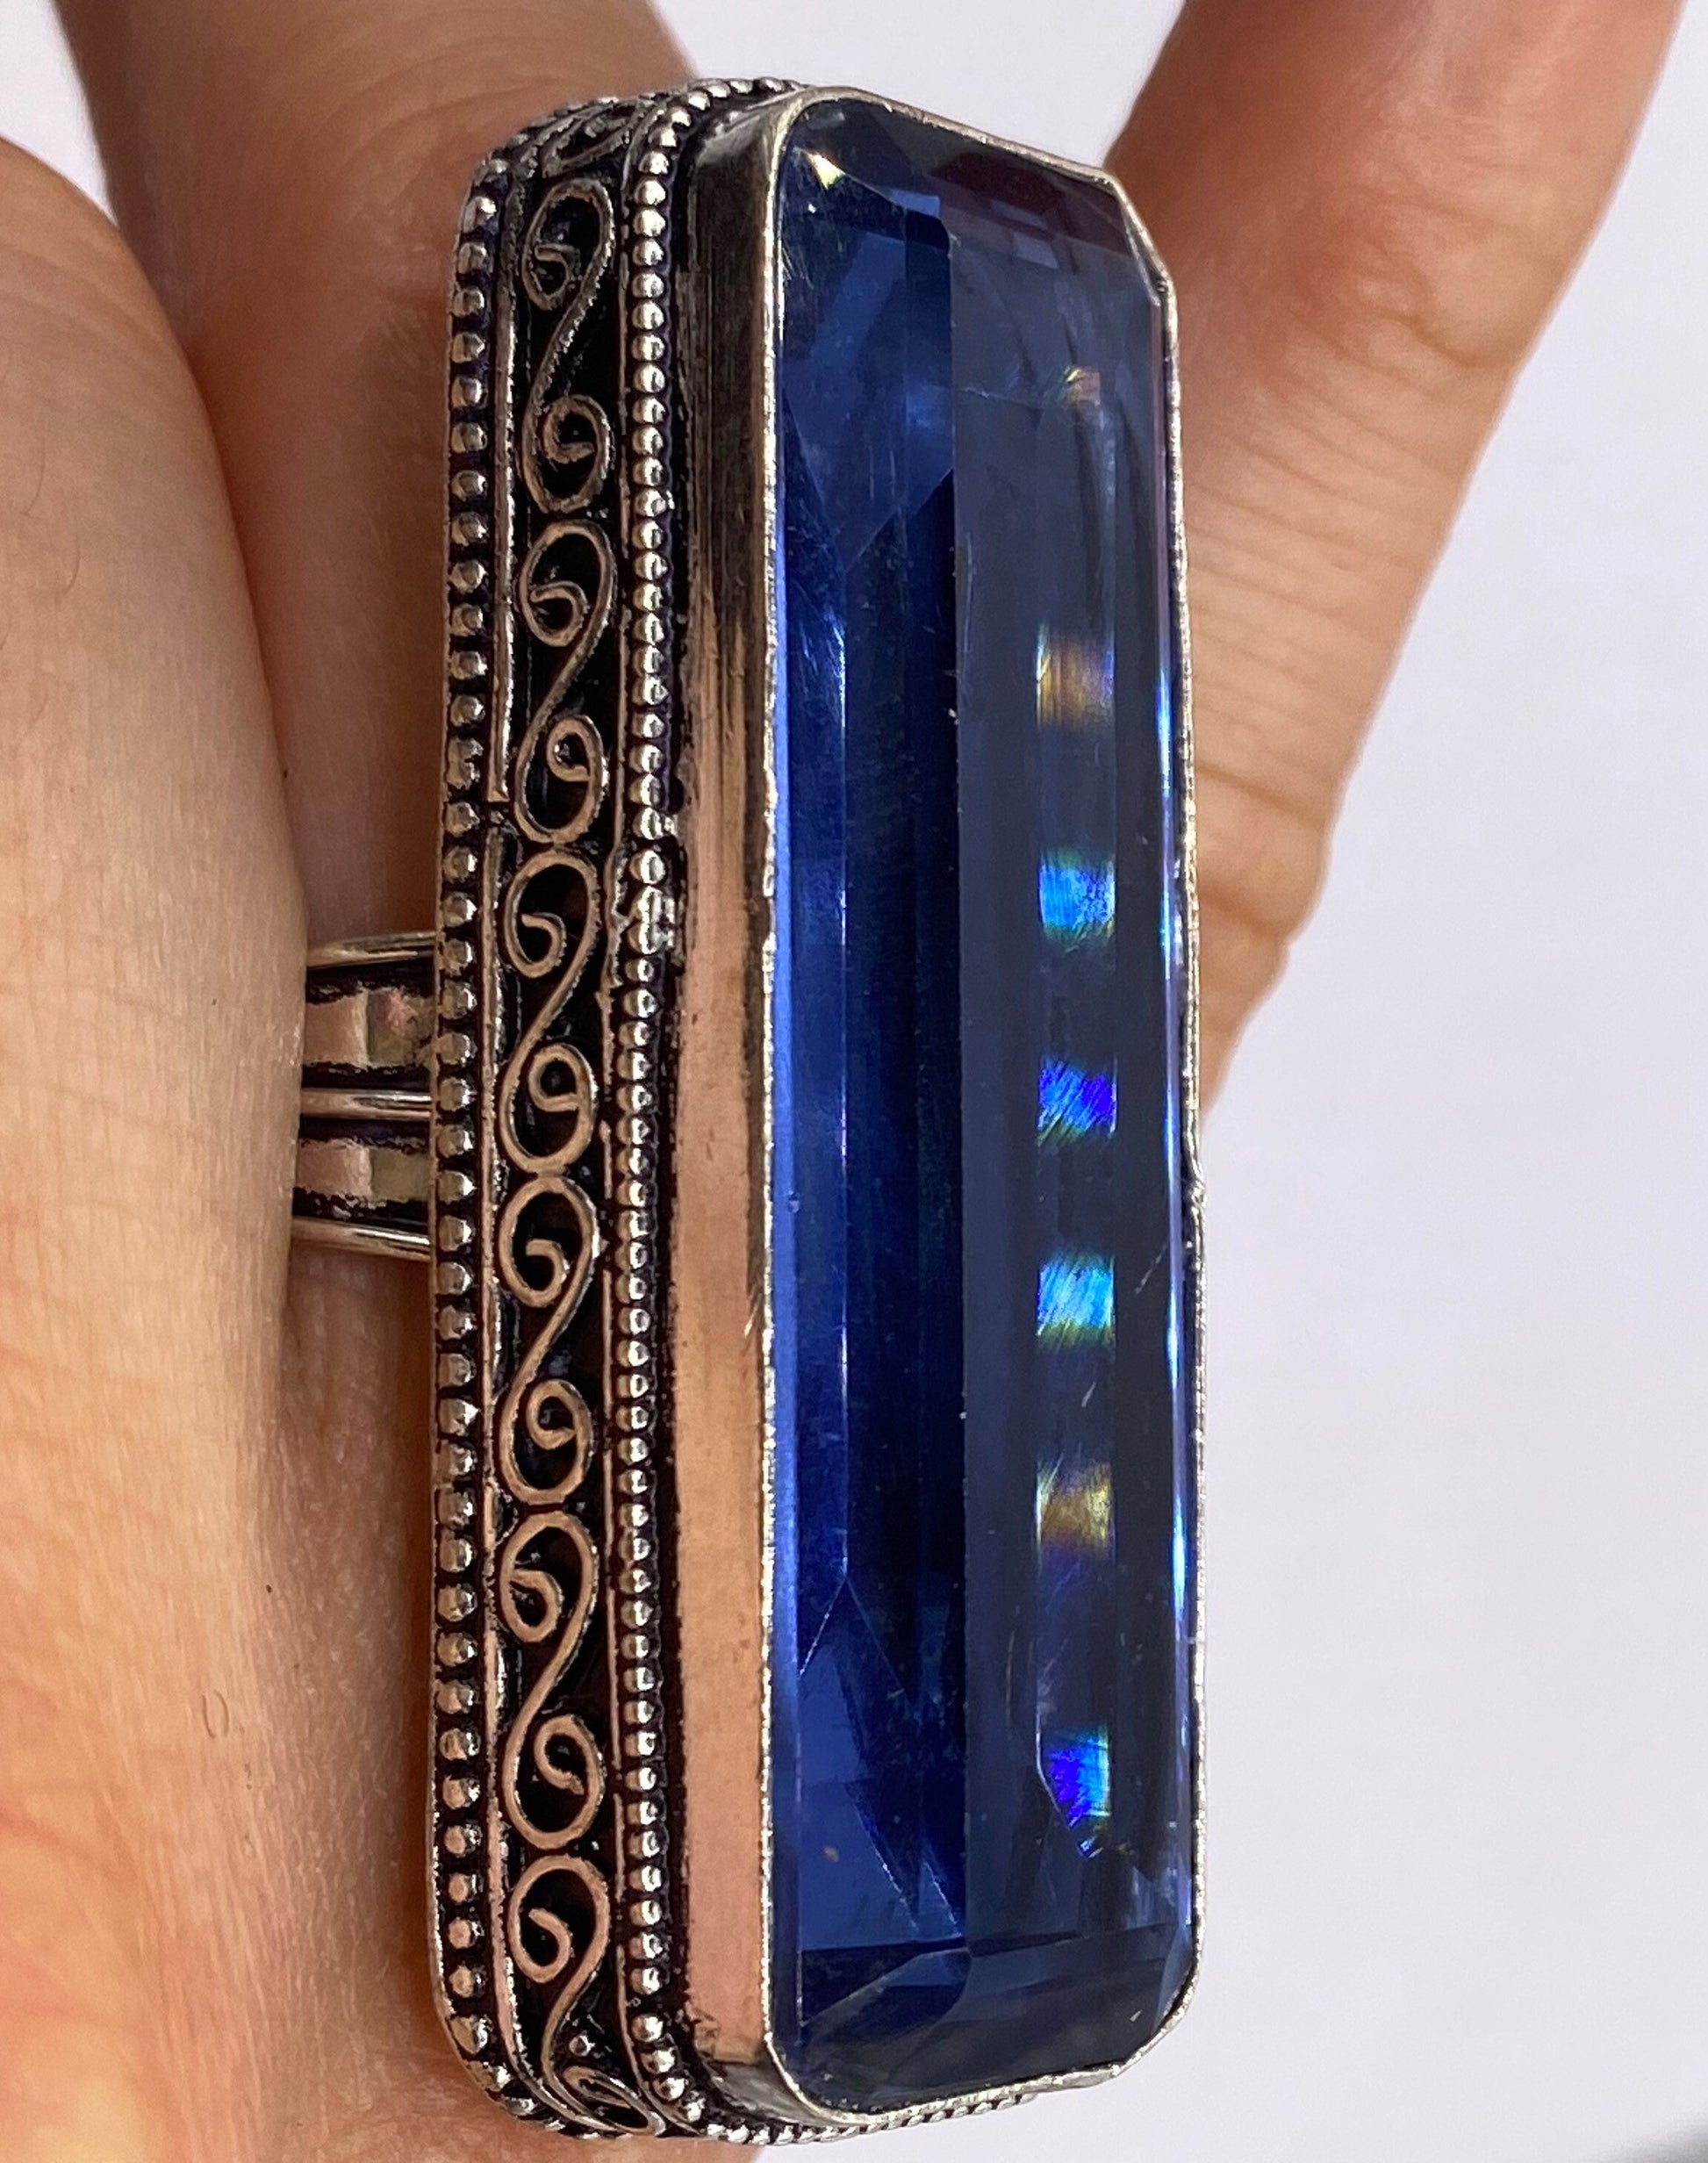 Vintage Deep Blue Volcanic Art Glass Ring